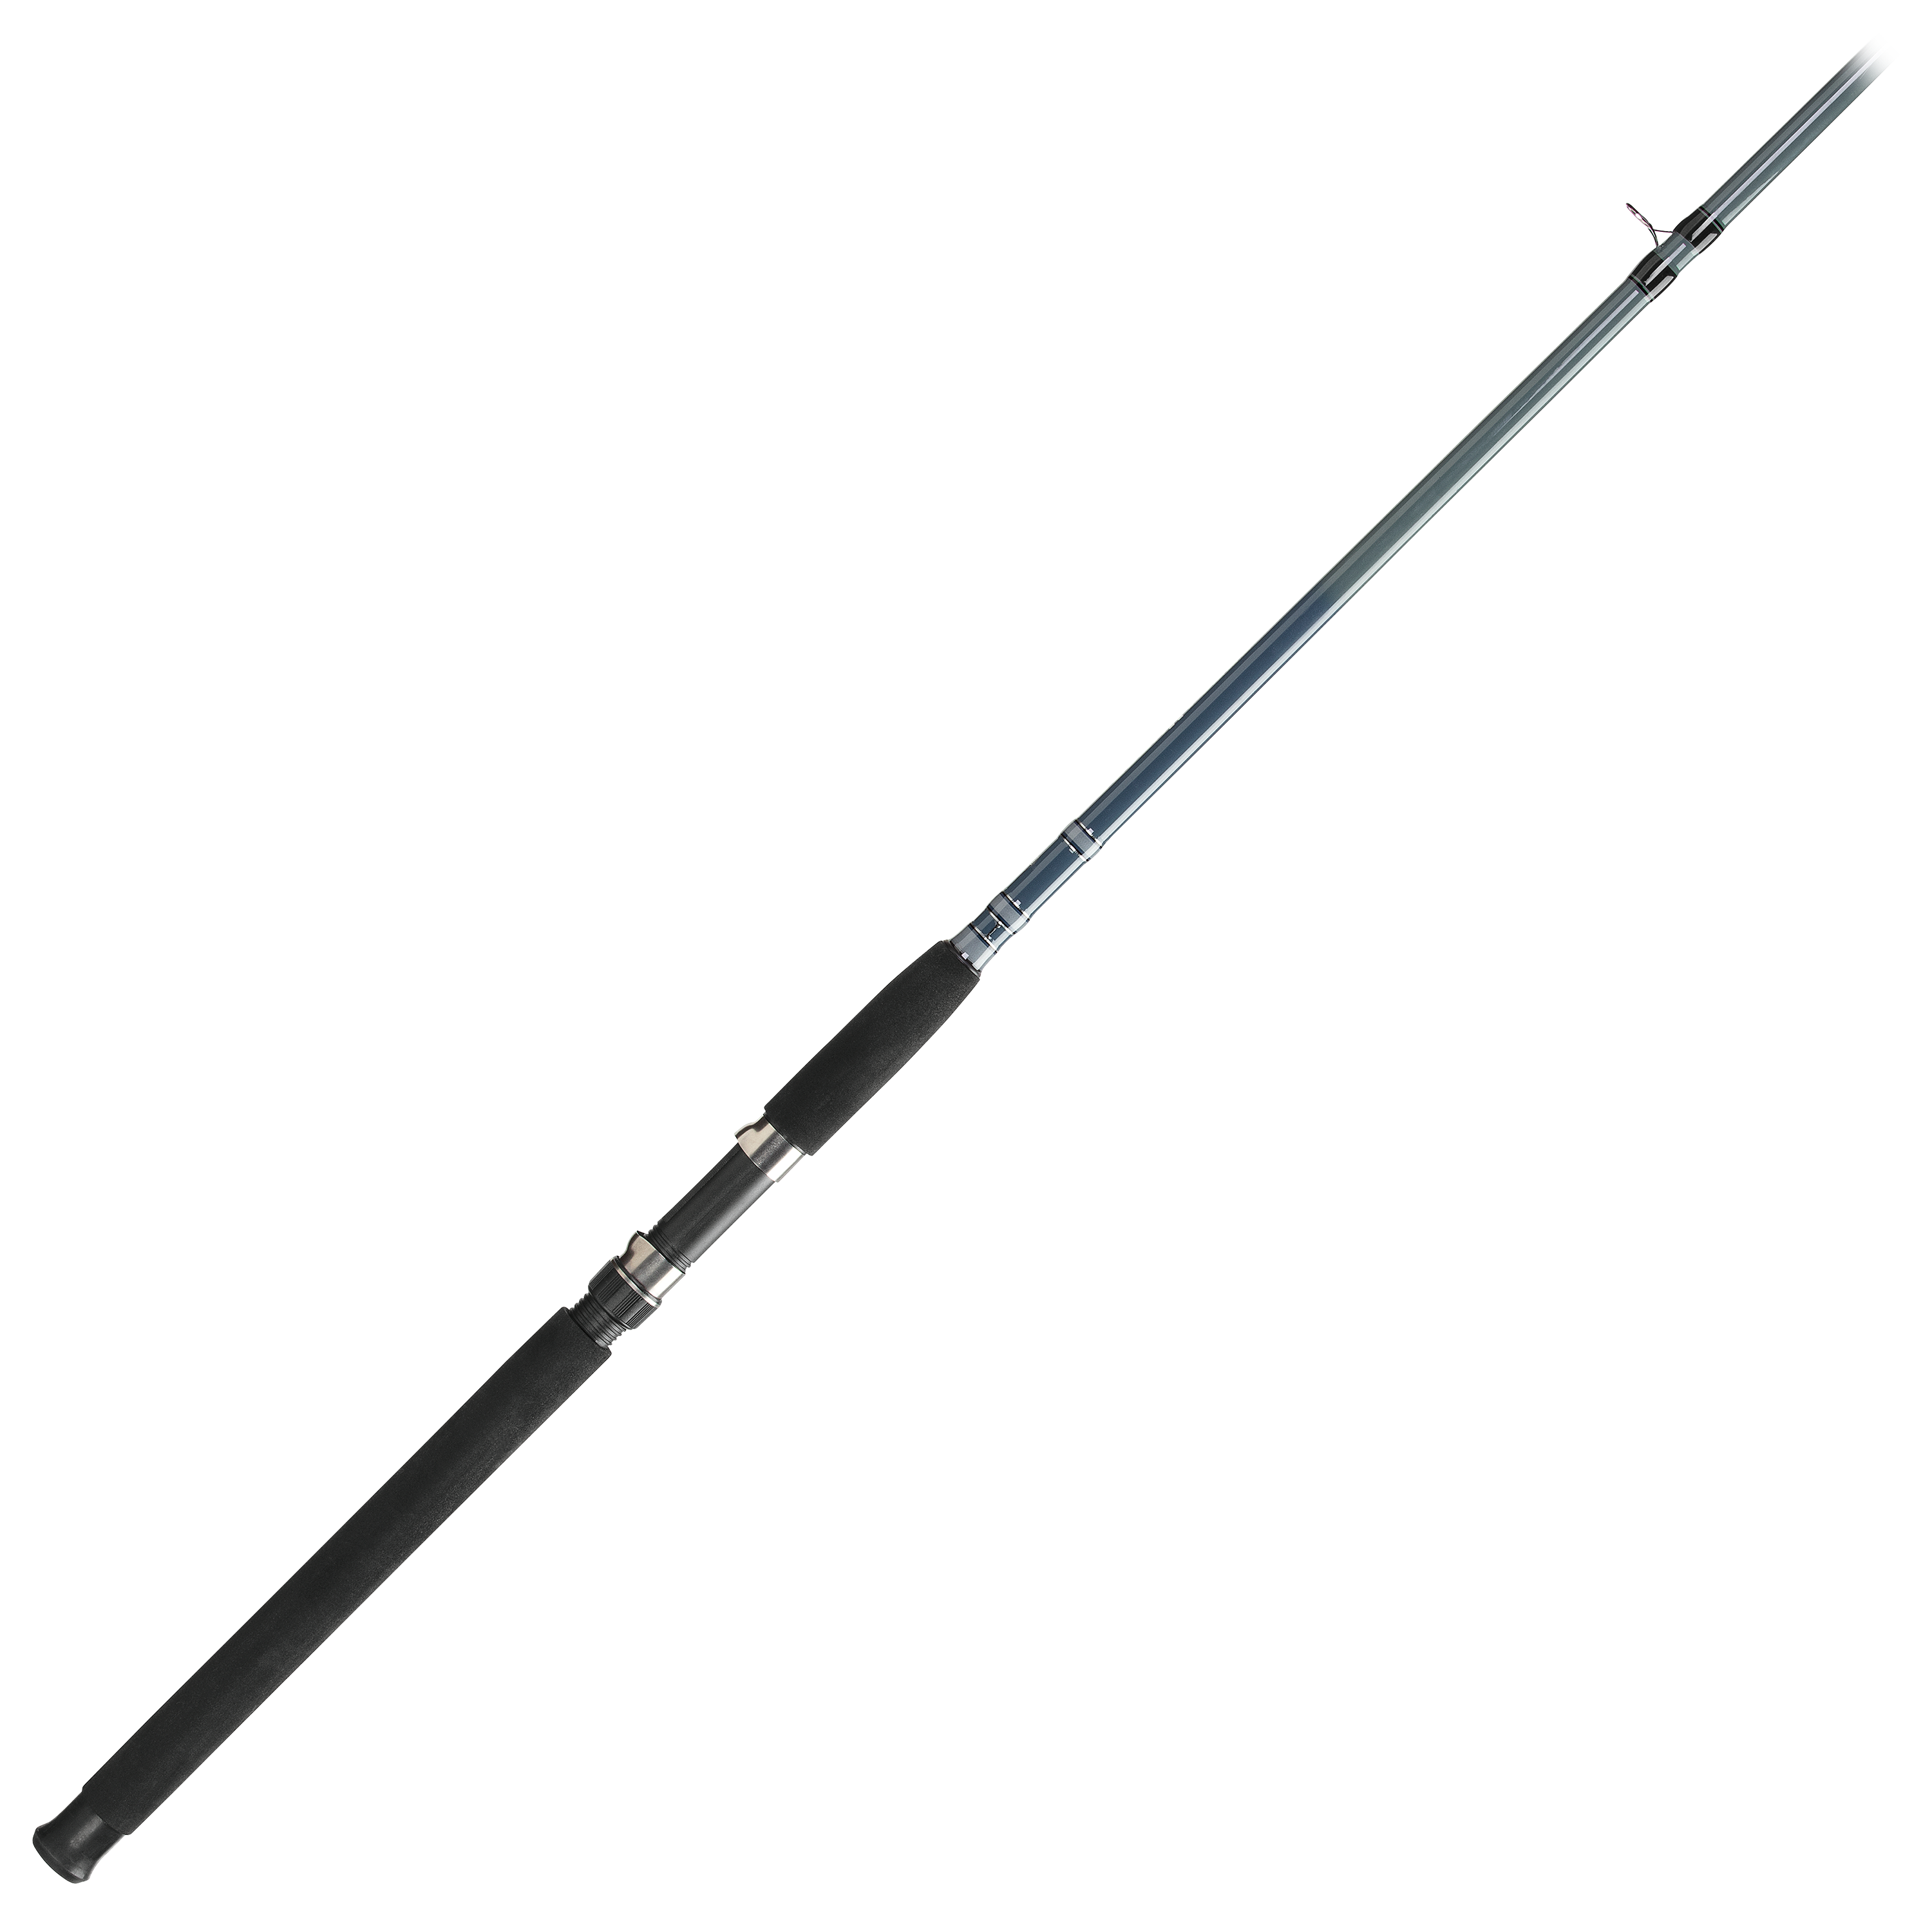 Bass Pro Shops Depthmaster Trolling Rod - 5' - Medium - Moderate - Lead Core - A